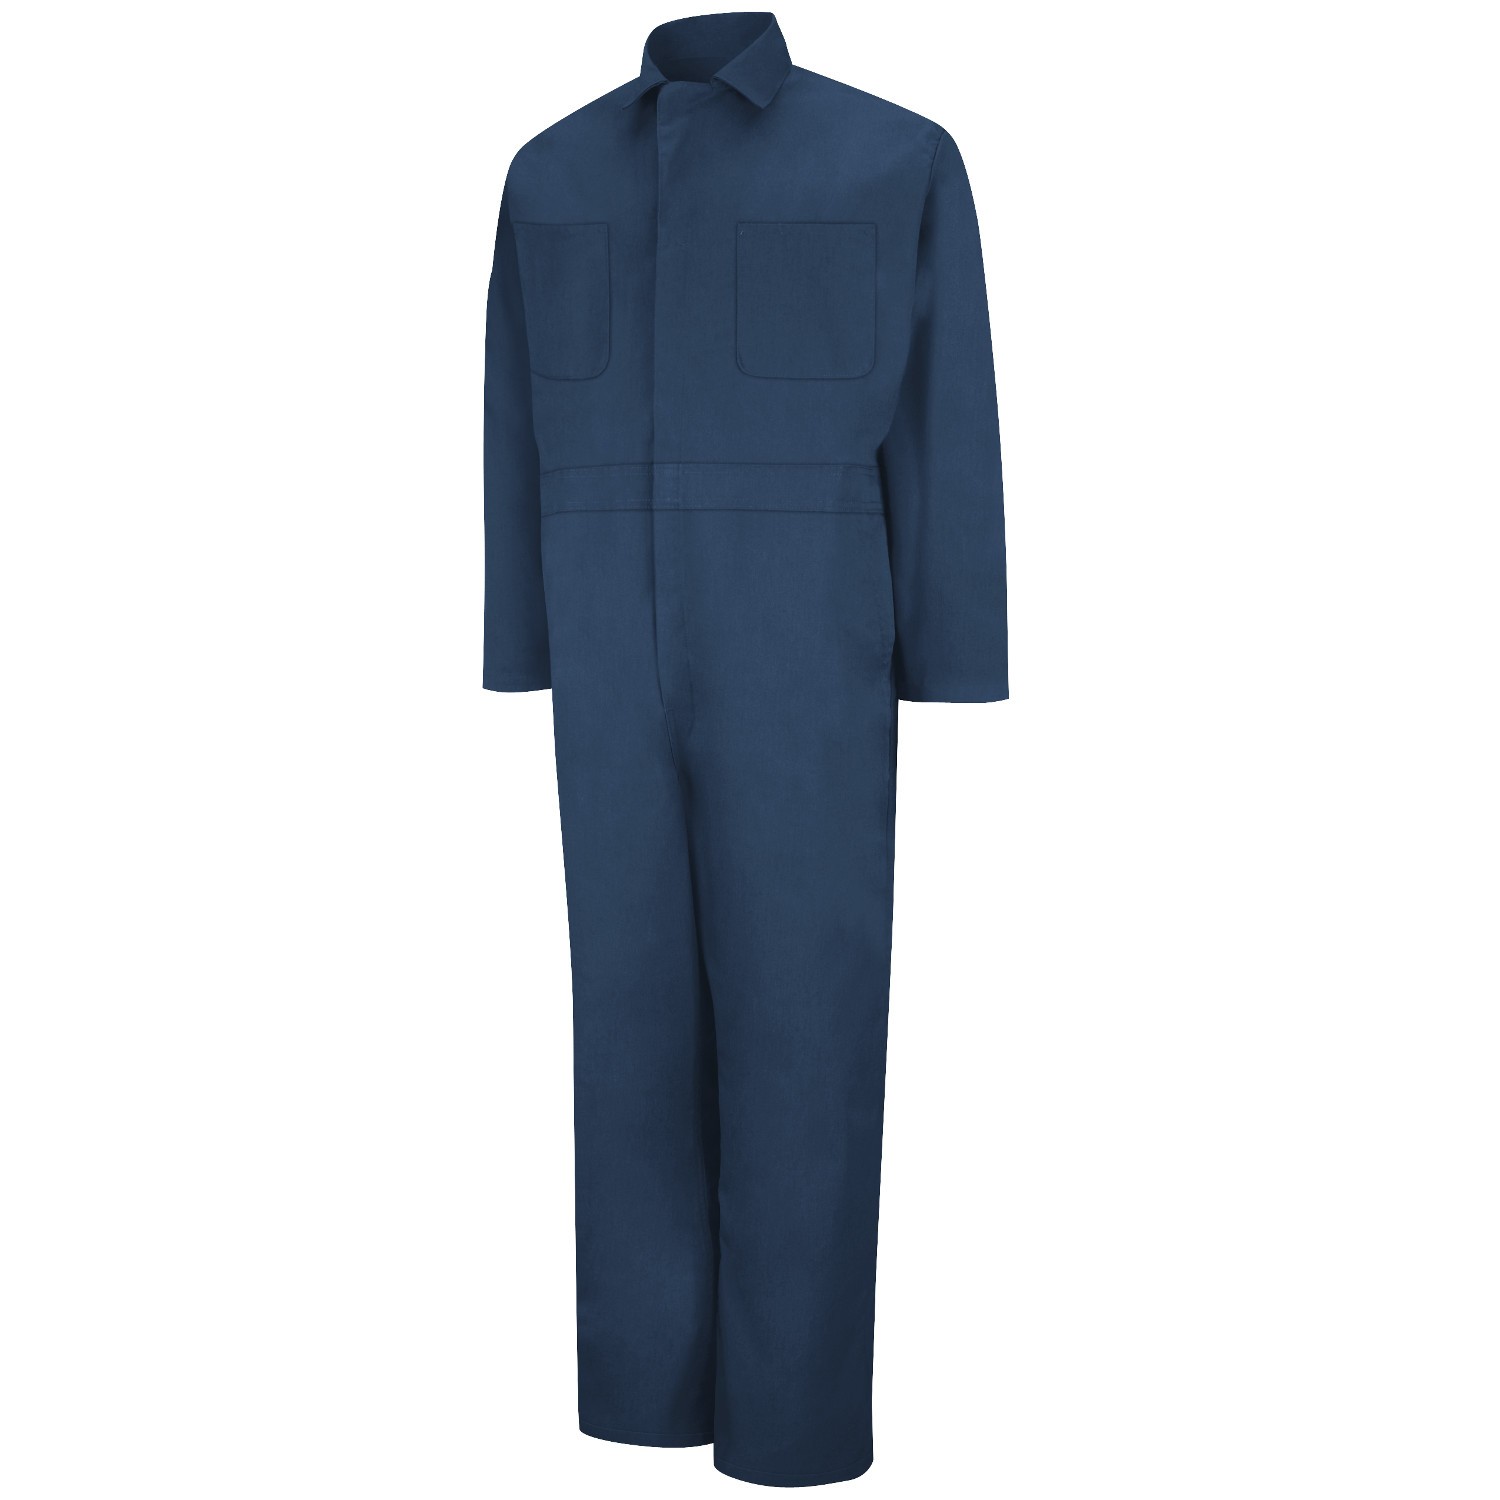 Qualitex ® Dungarees-Waist Pants Shorts 2-Tone Grain Blue/Black Pro MG 245 Top! 